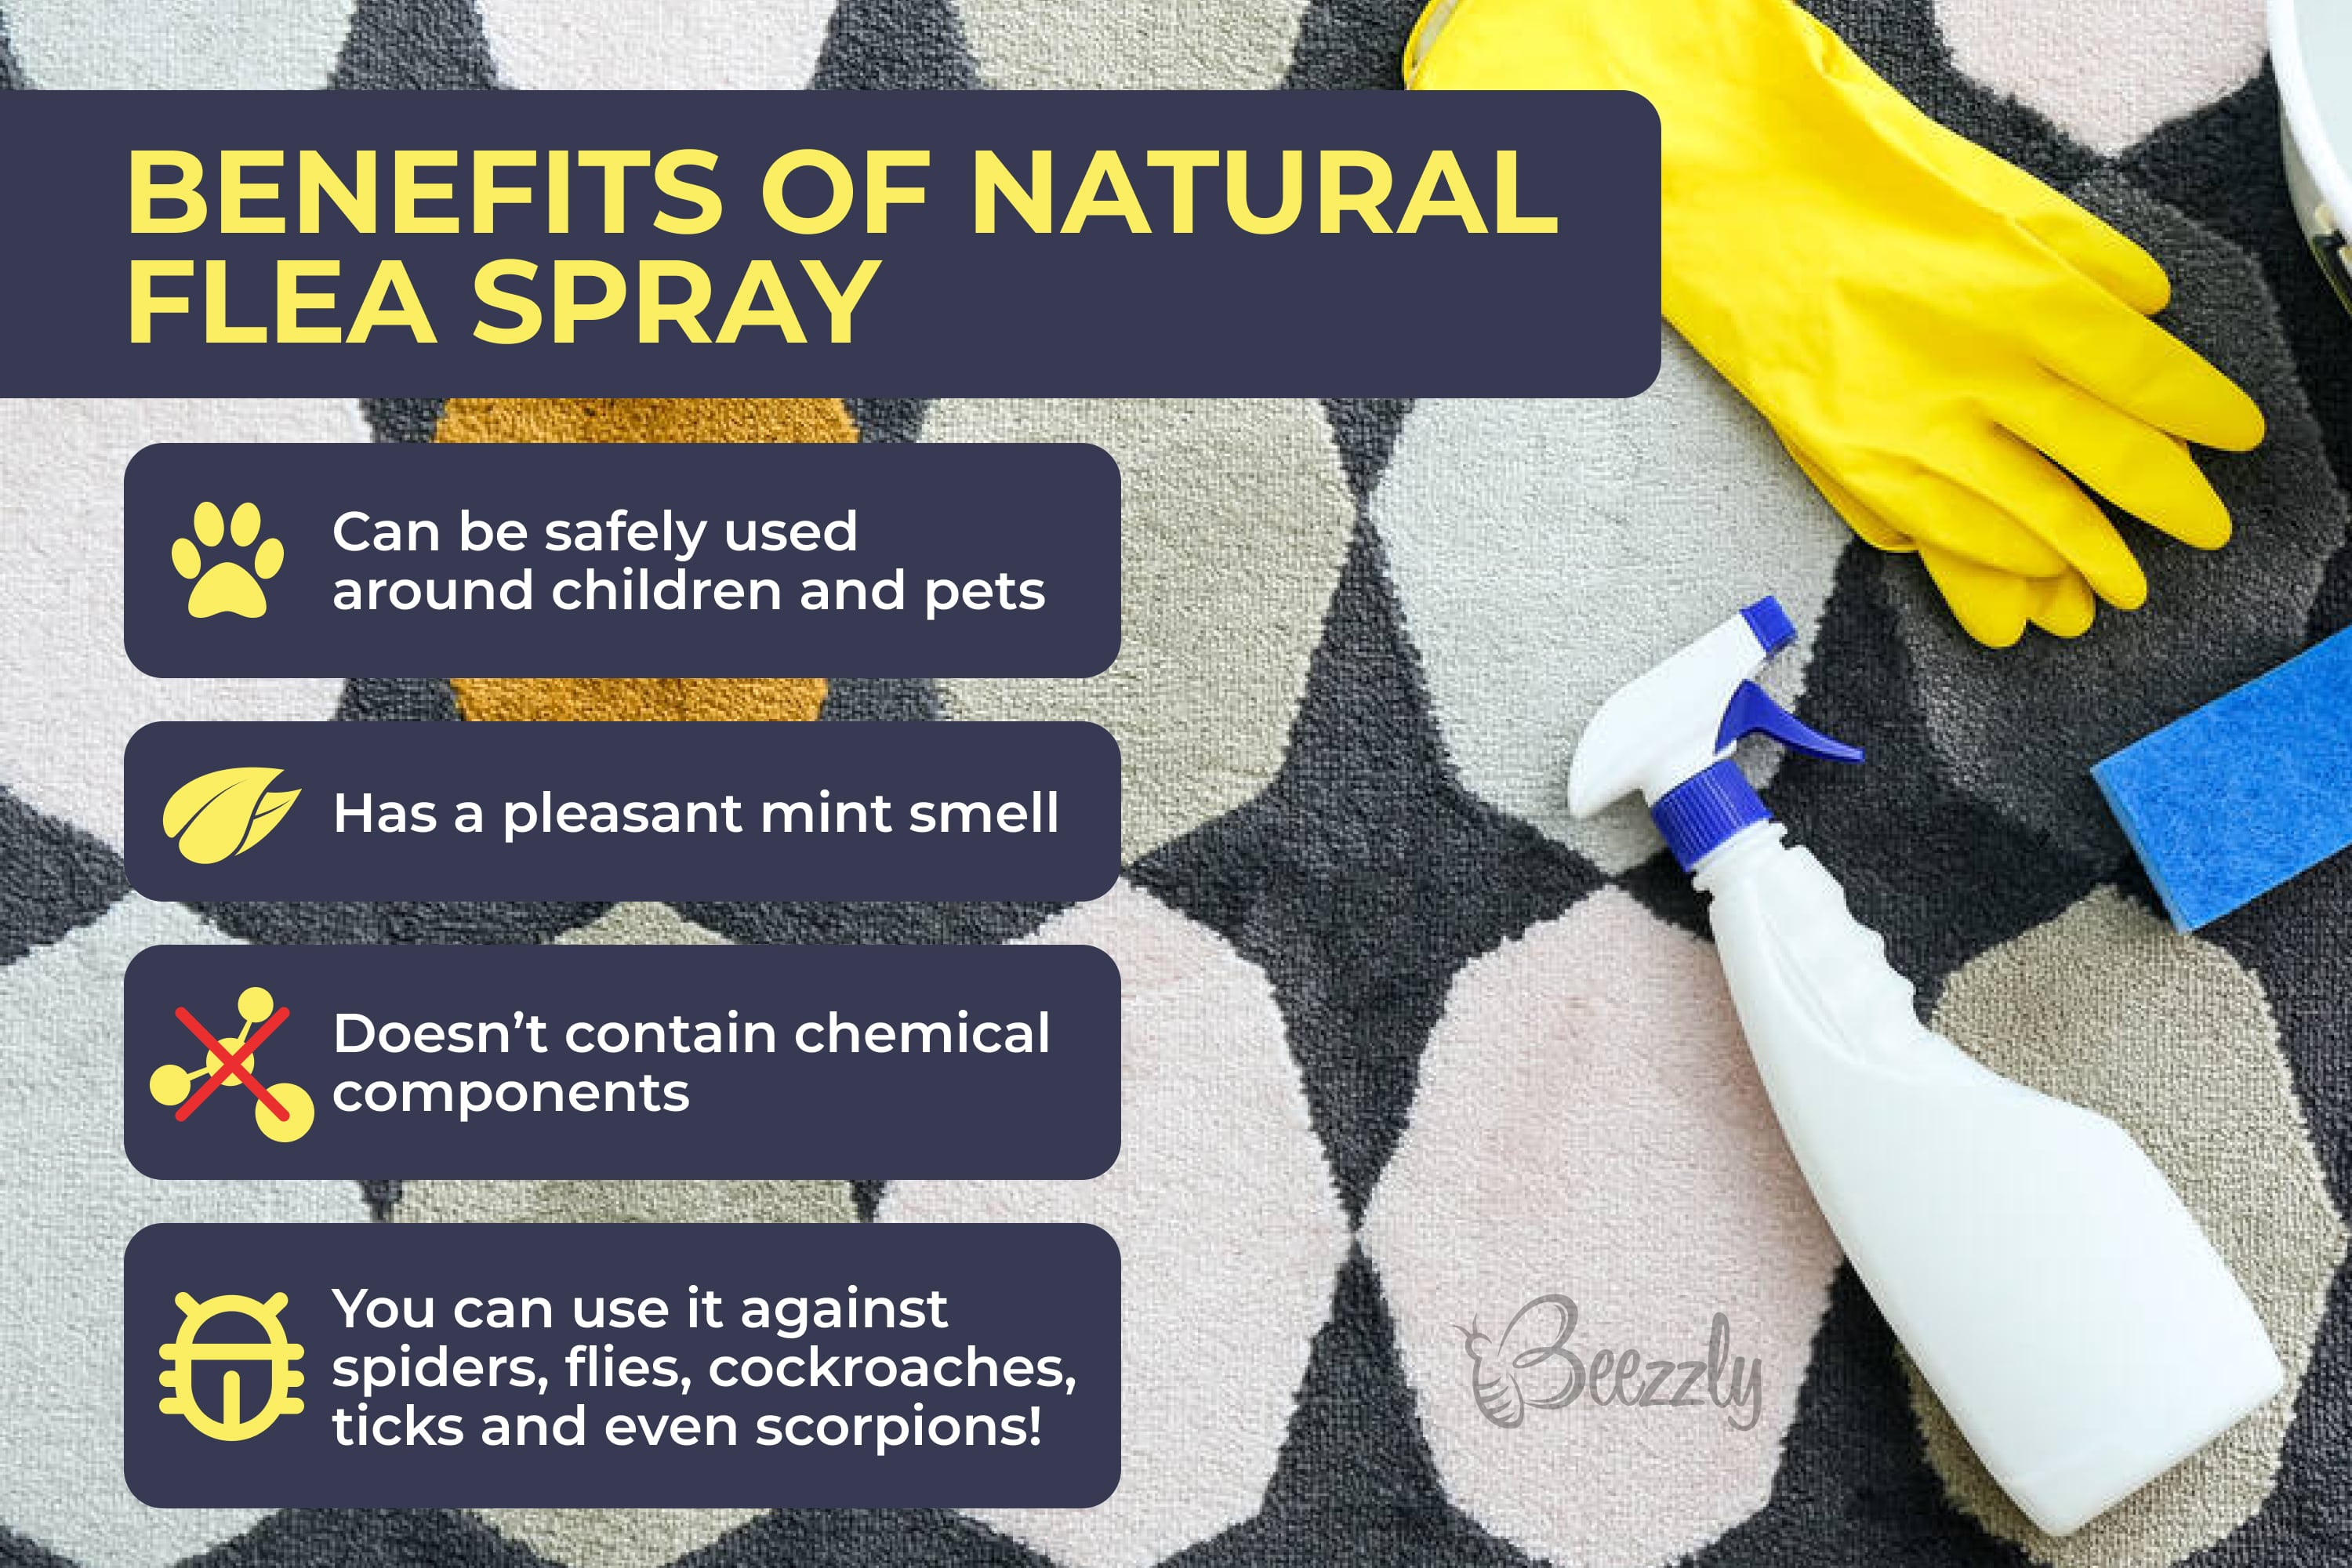 Benefits of natural flea spray